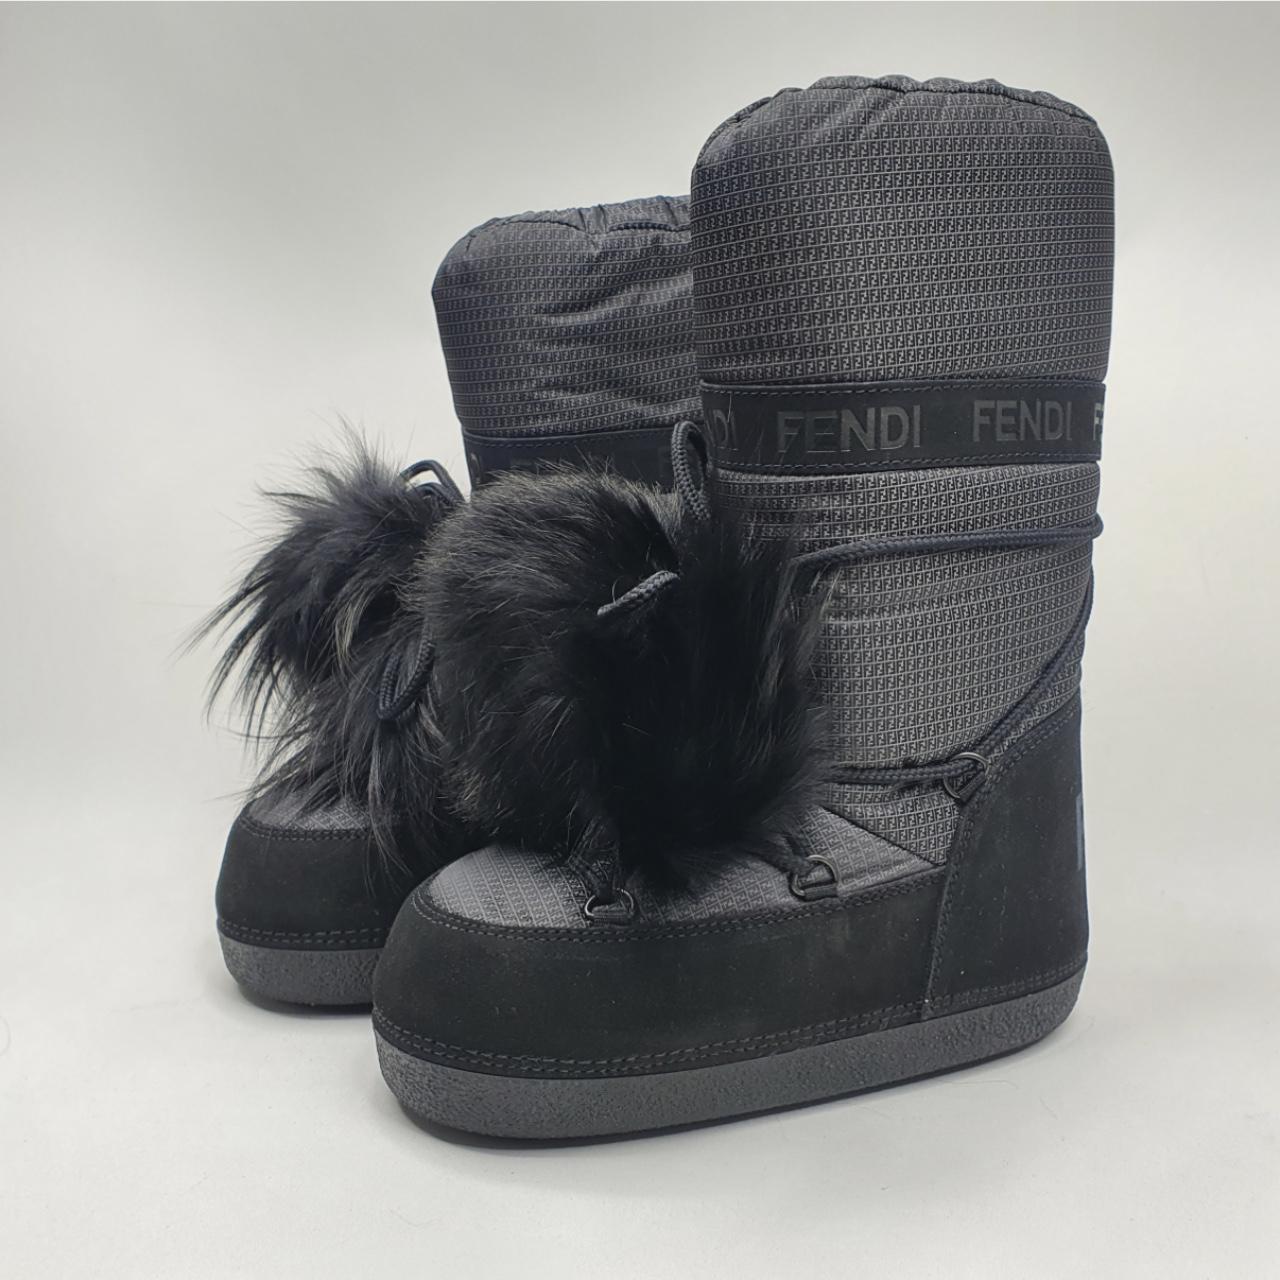 Fendi Black Moon Boots Brand New Never Worn Fendi... - Depop